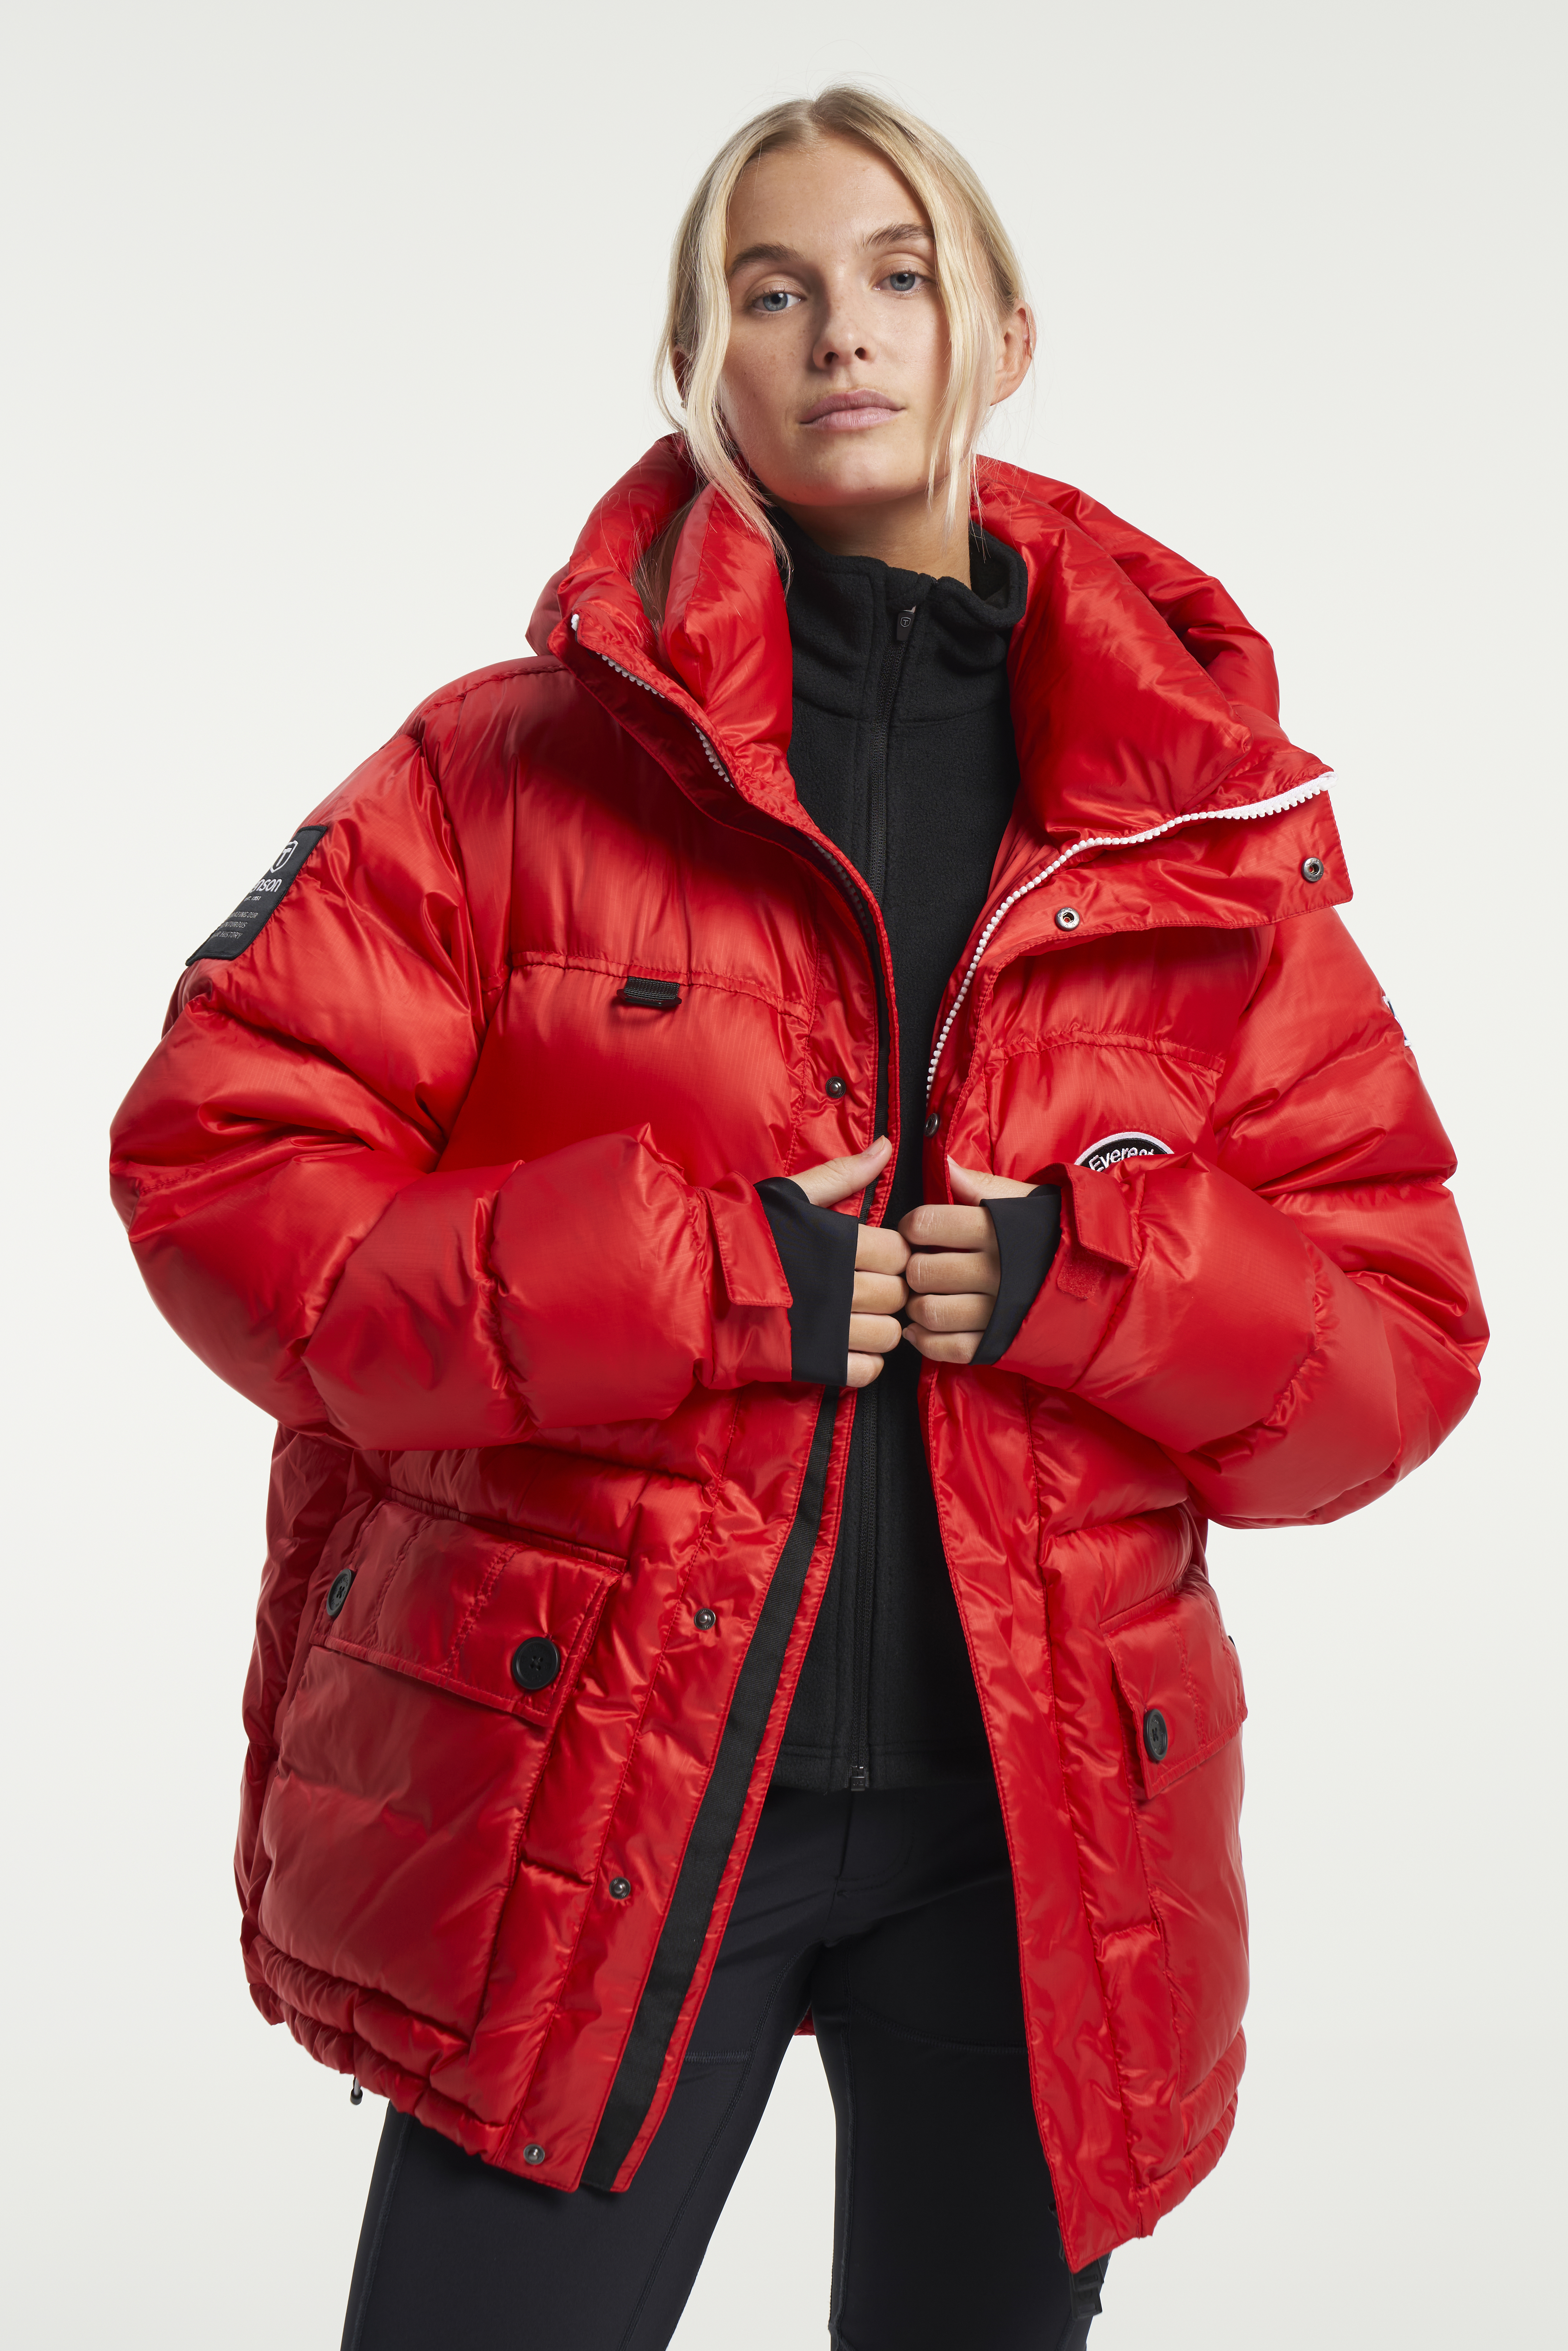 DKNY Donna Karan Black Winter Jacket hood with Down Filler & fur wool waist  US S | eBay